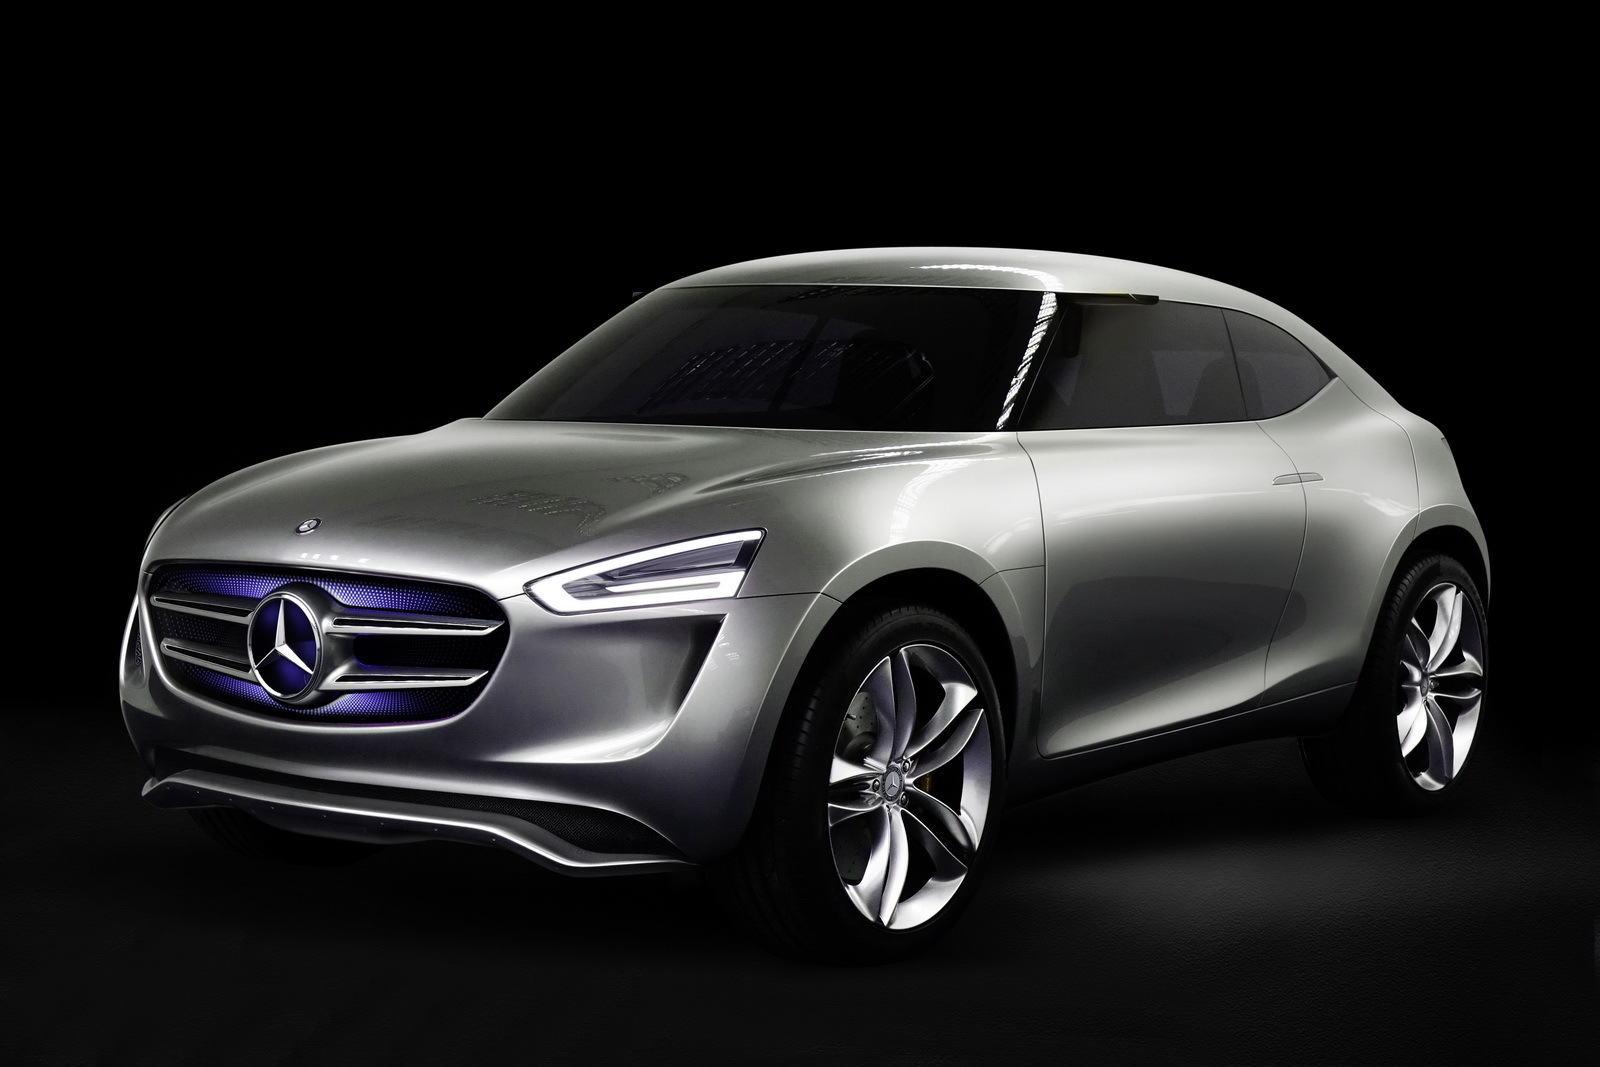 2014 Mercedes Benz Vision G Code Concept